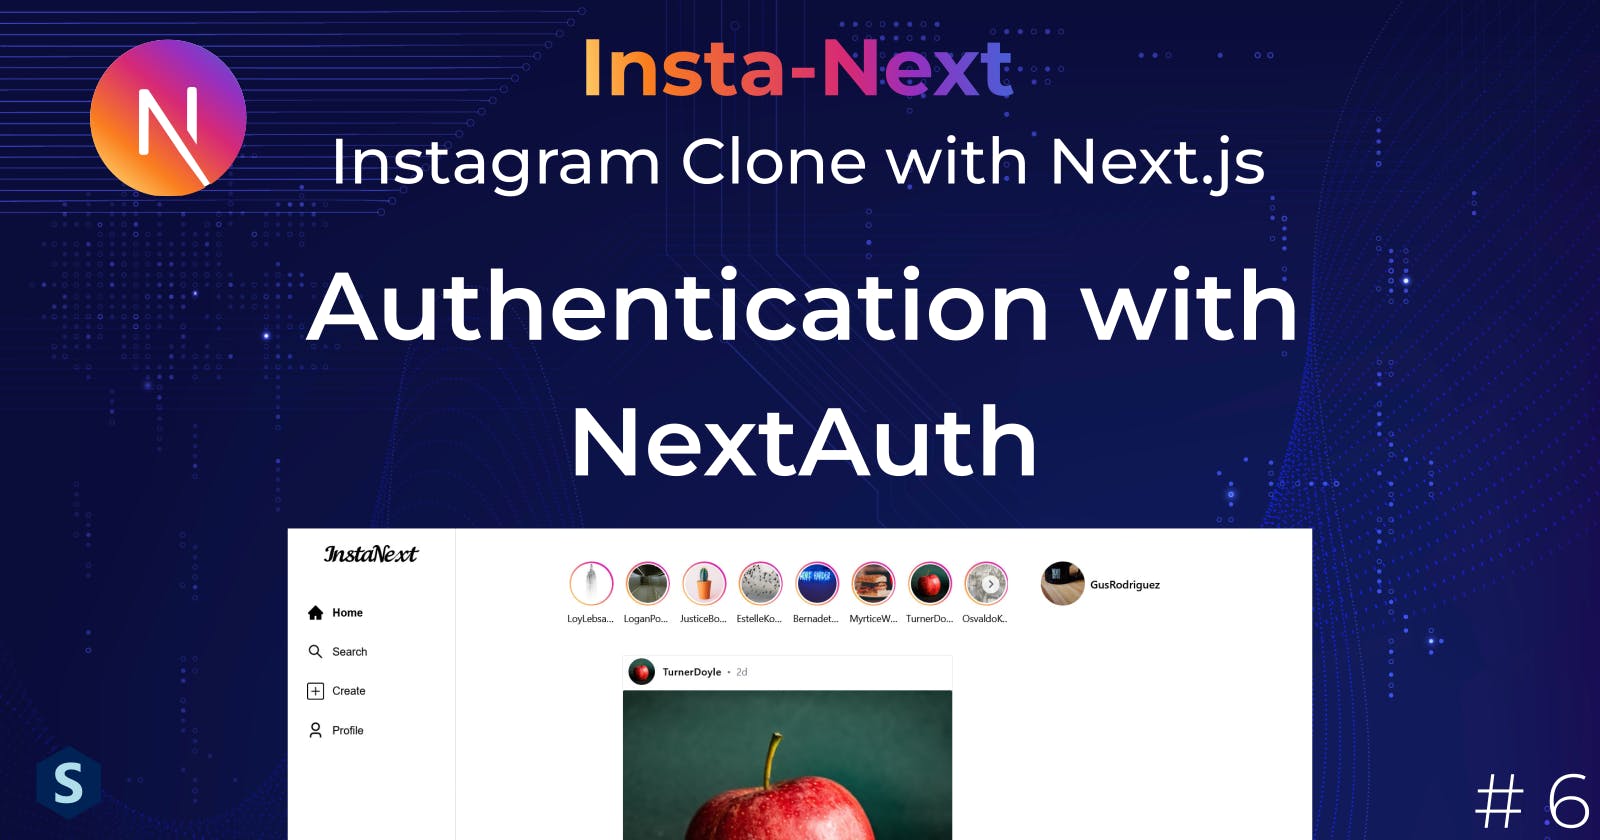 Insta-Next: Authentication with NextAuth